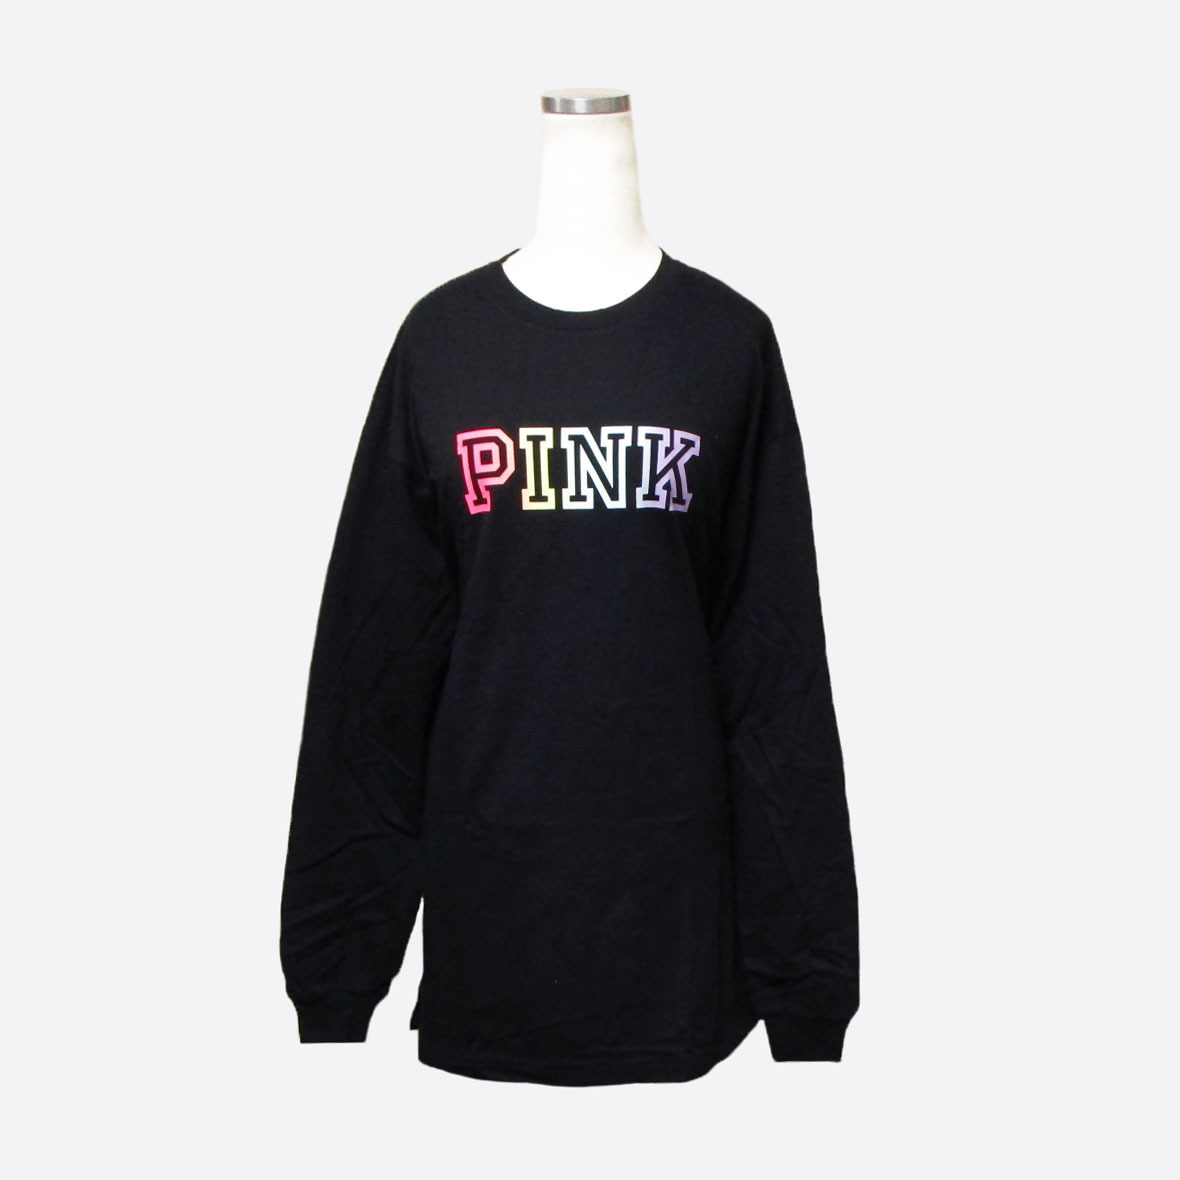 ★SALE★Victoria's Secret/Pink/ピンク★レインボーロゴプリント長袖Tシャツ (Black/XS)